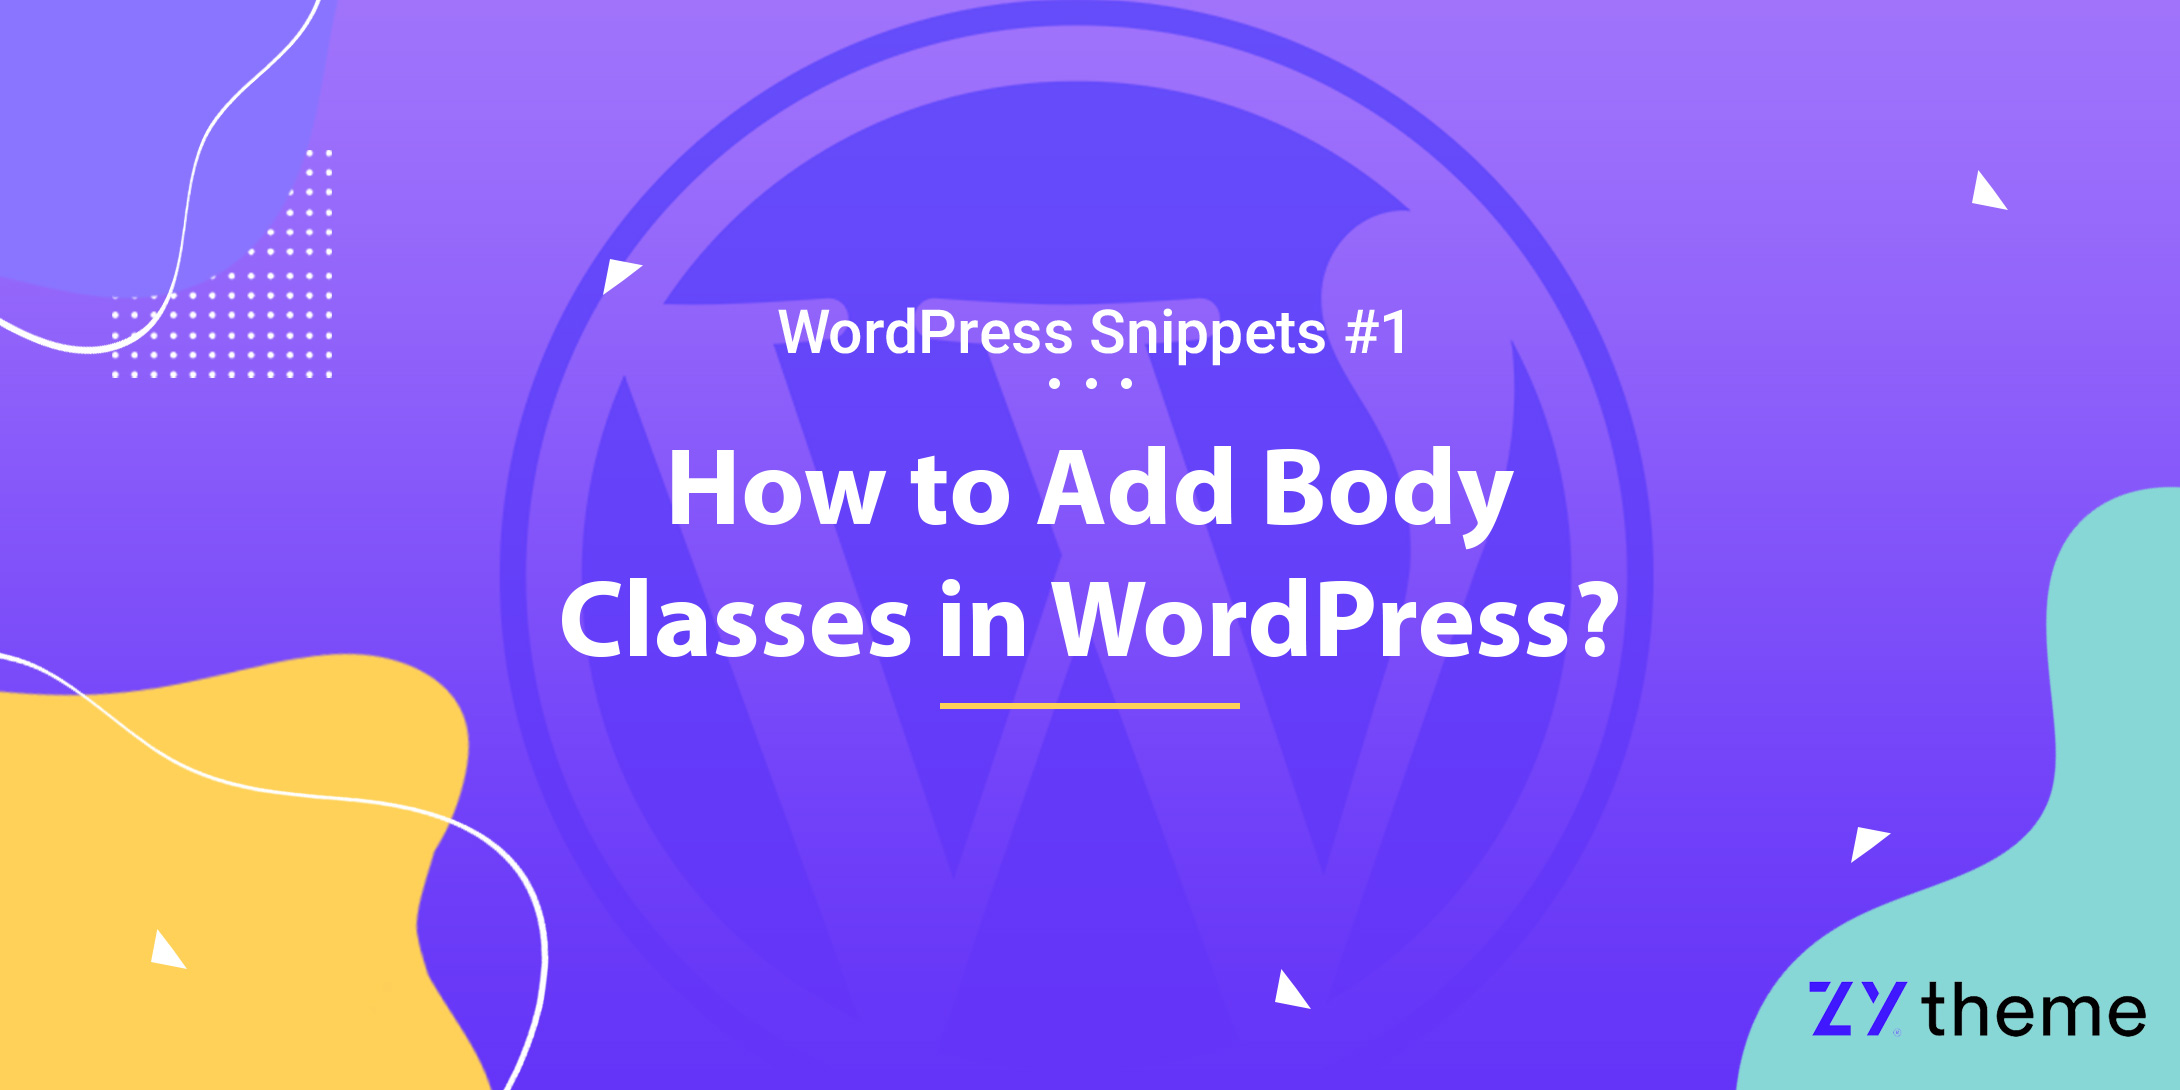 How to Add Body Classes in WordPress